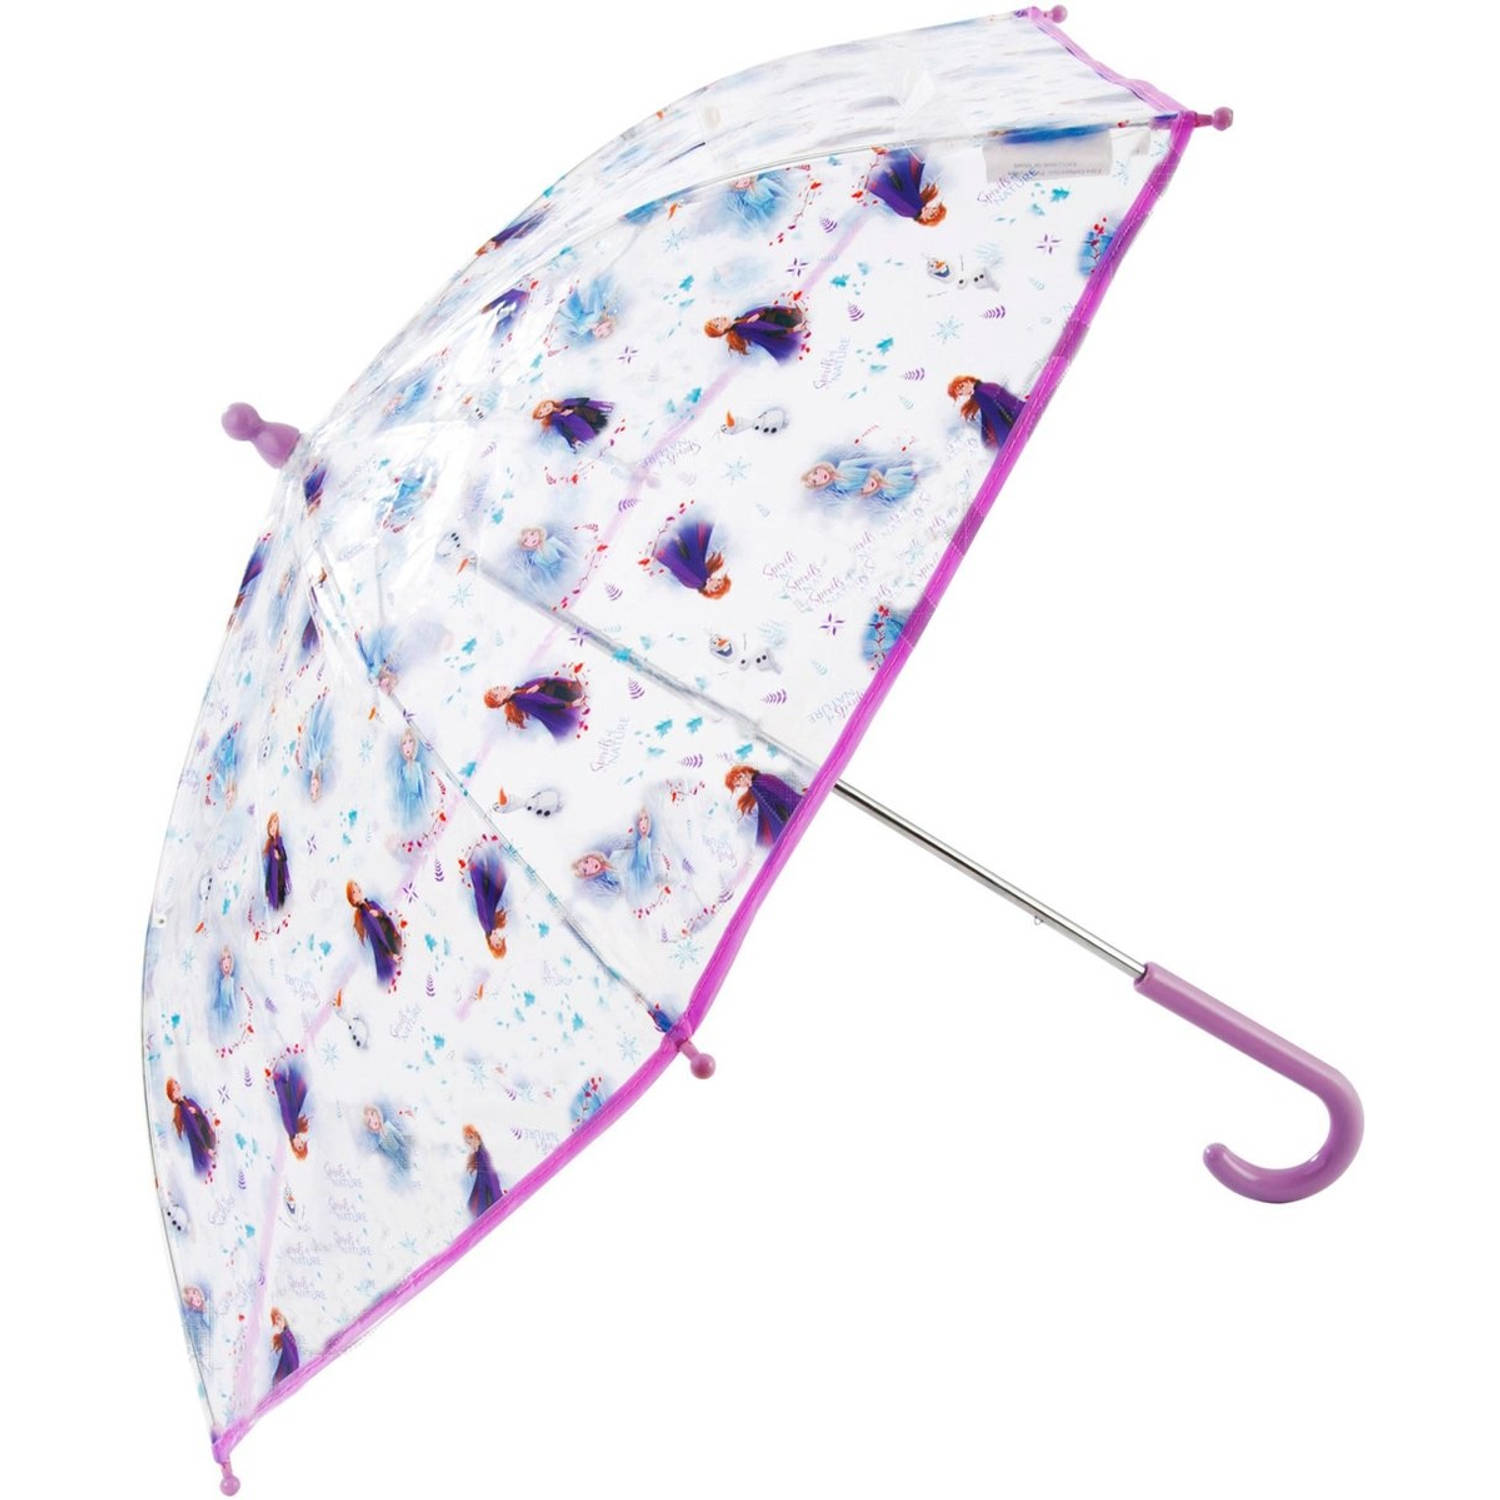 Kinderparaplu - Frozen Kinderparaplu&apos;s - Disney Frozen Kinderparaplu 60cm - Paraplu - Paraplu kopen - Paraplu kind -